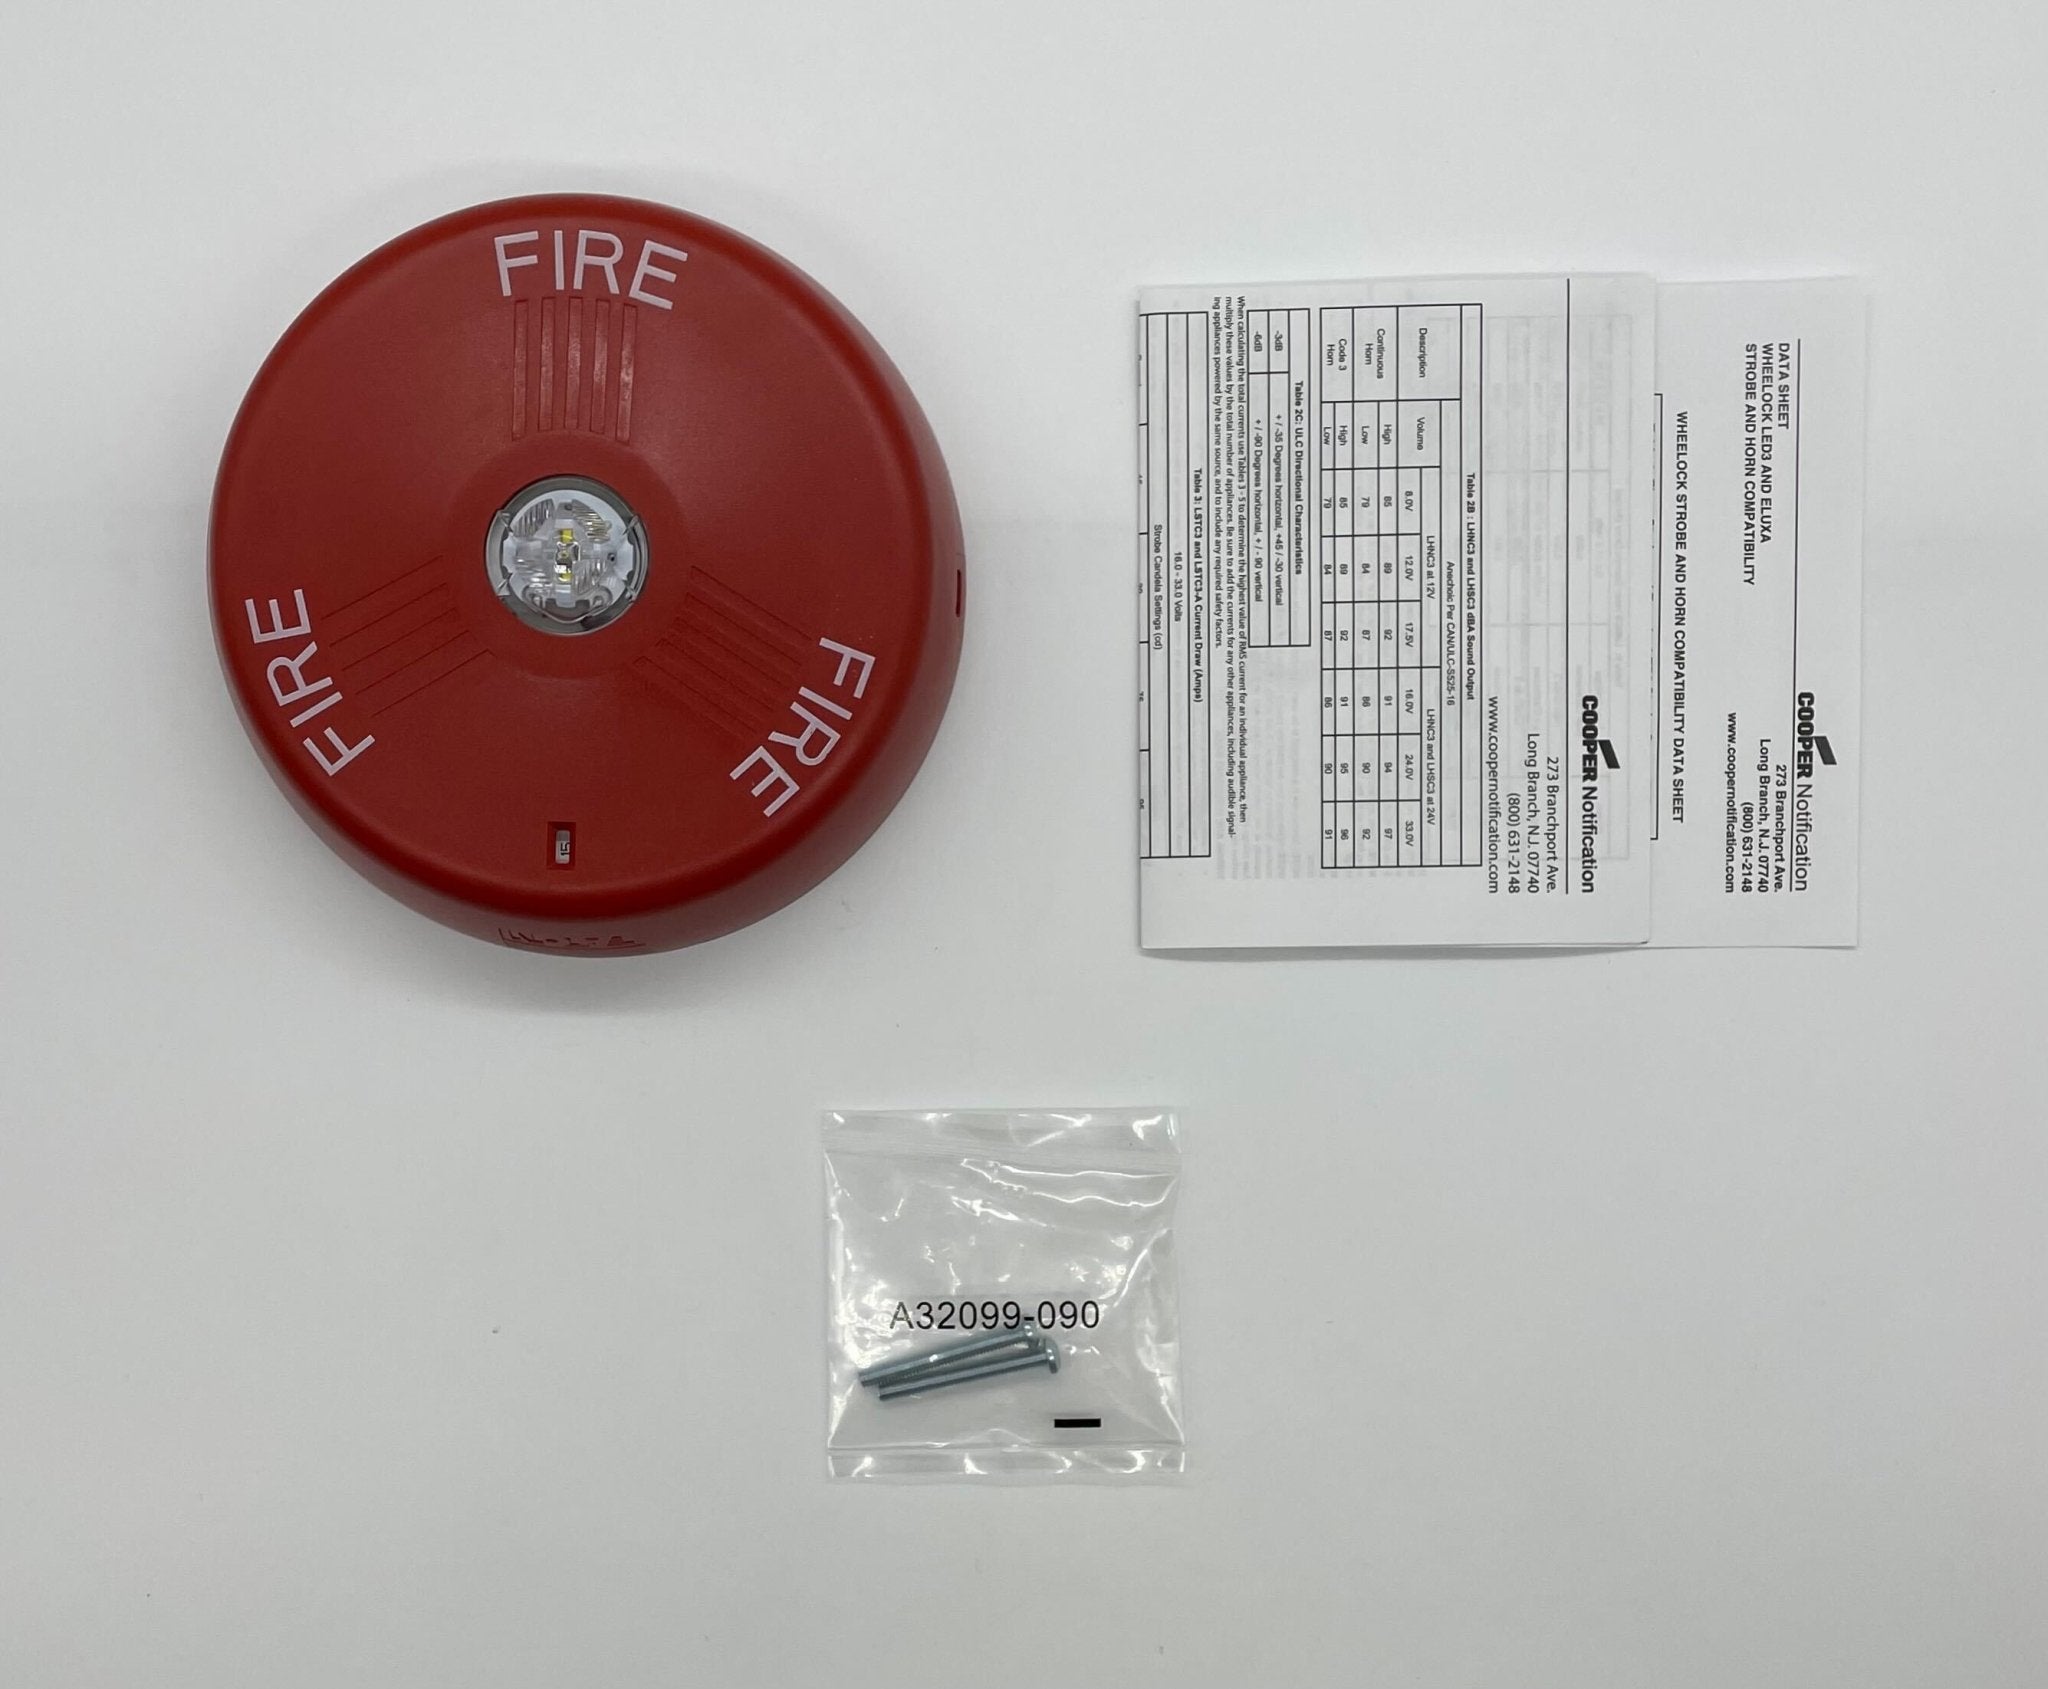 Wheelock LSTRC3 - The Fire Alarm Supplier